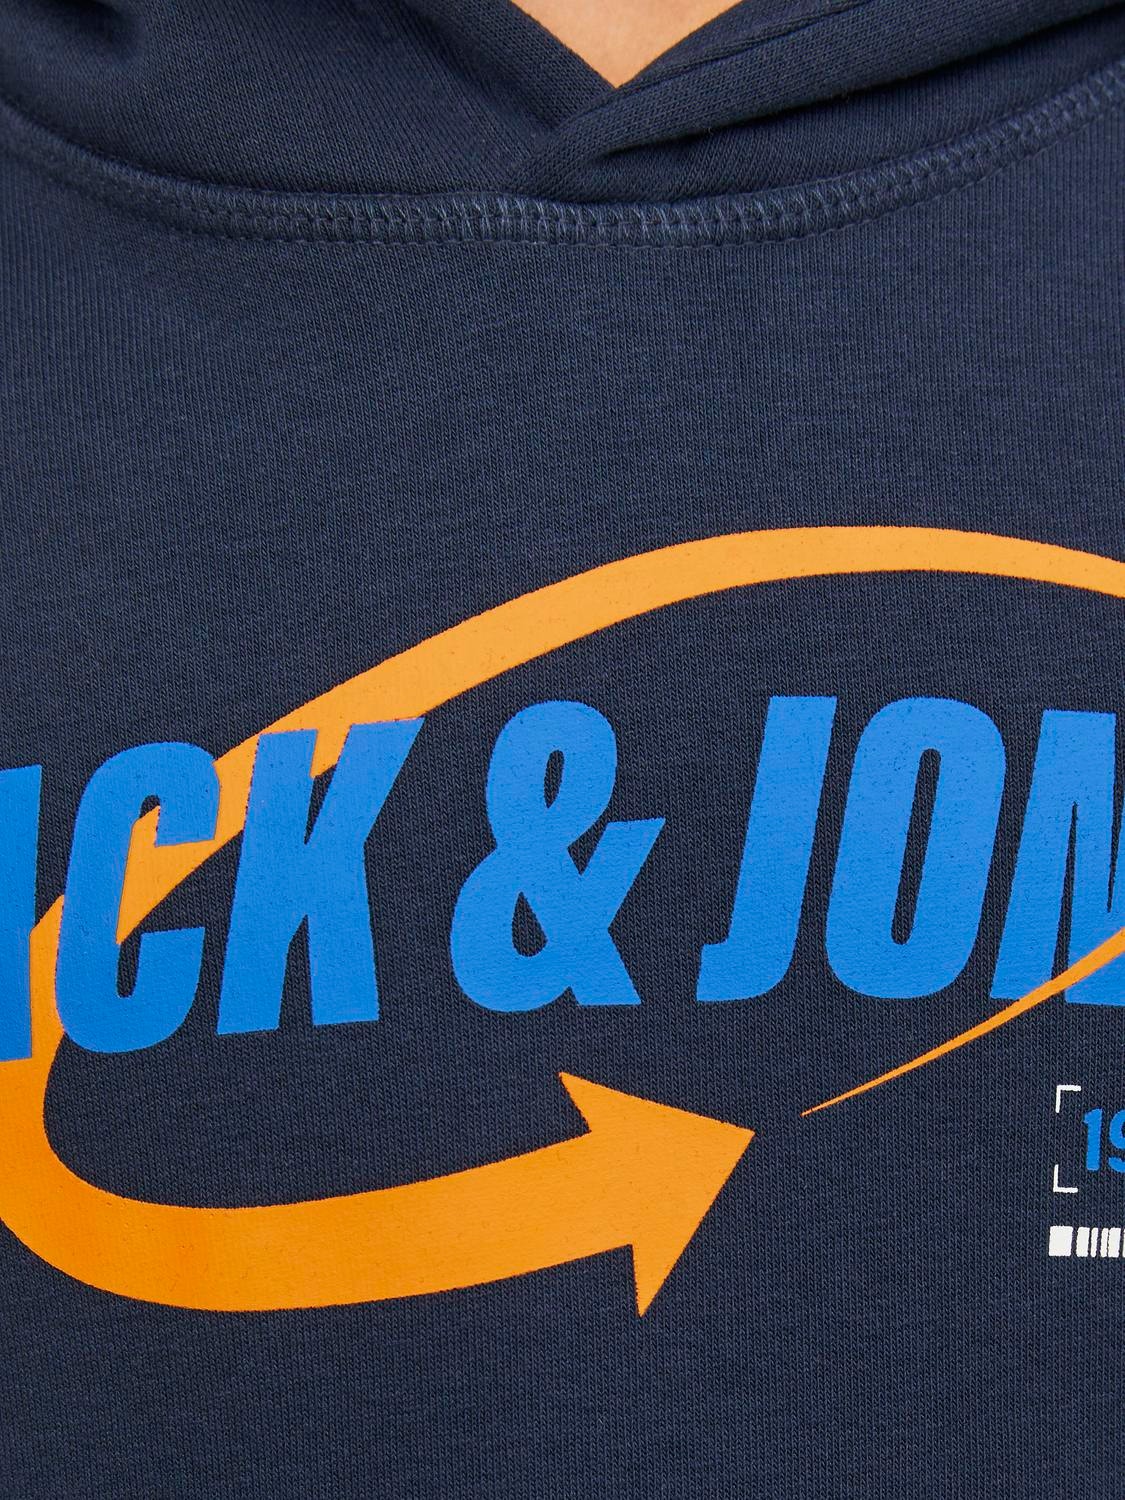 Jack & Jones Logo Hoodie For boys -Navy Blazer - 12247700